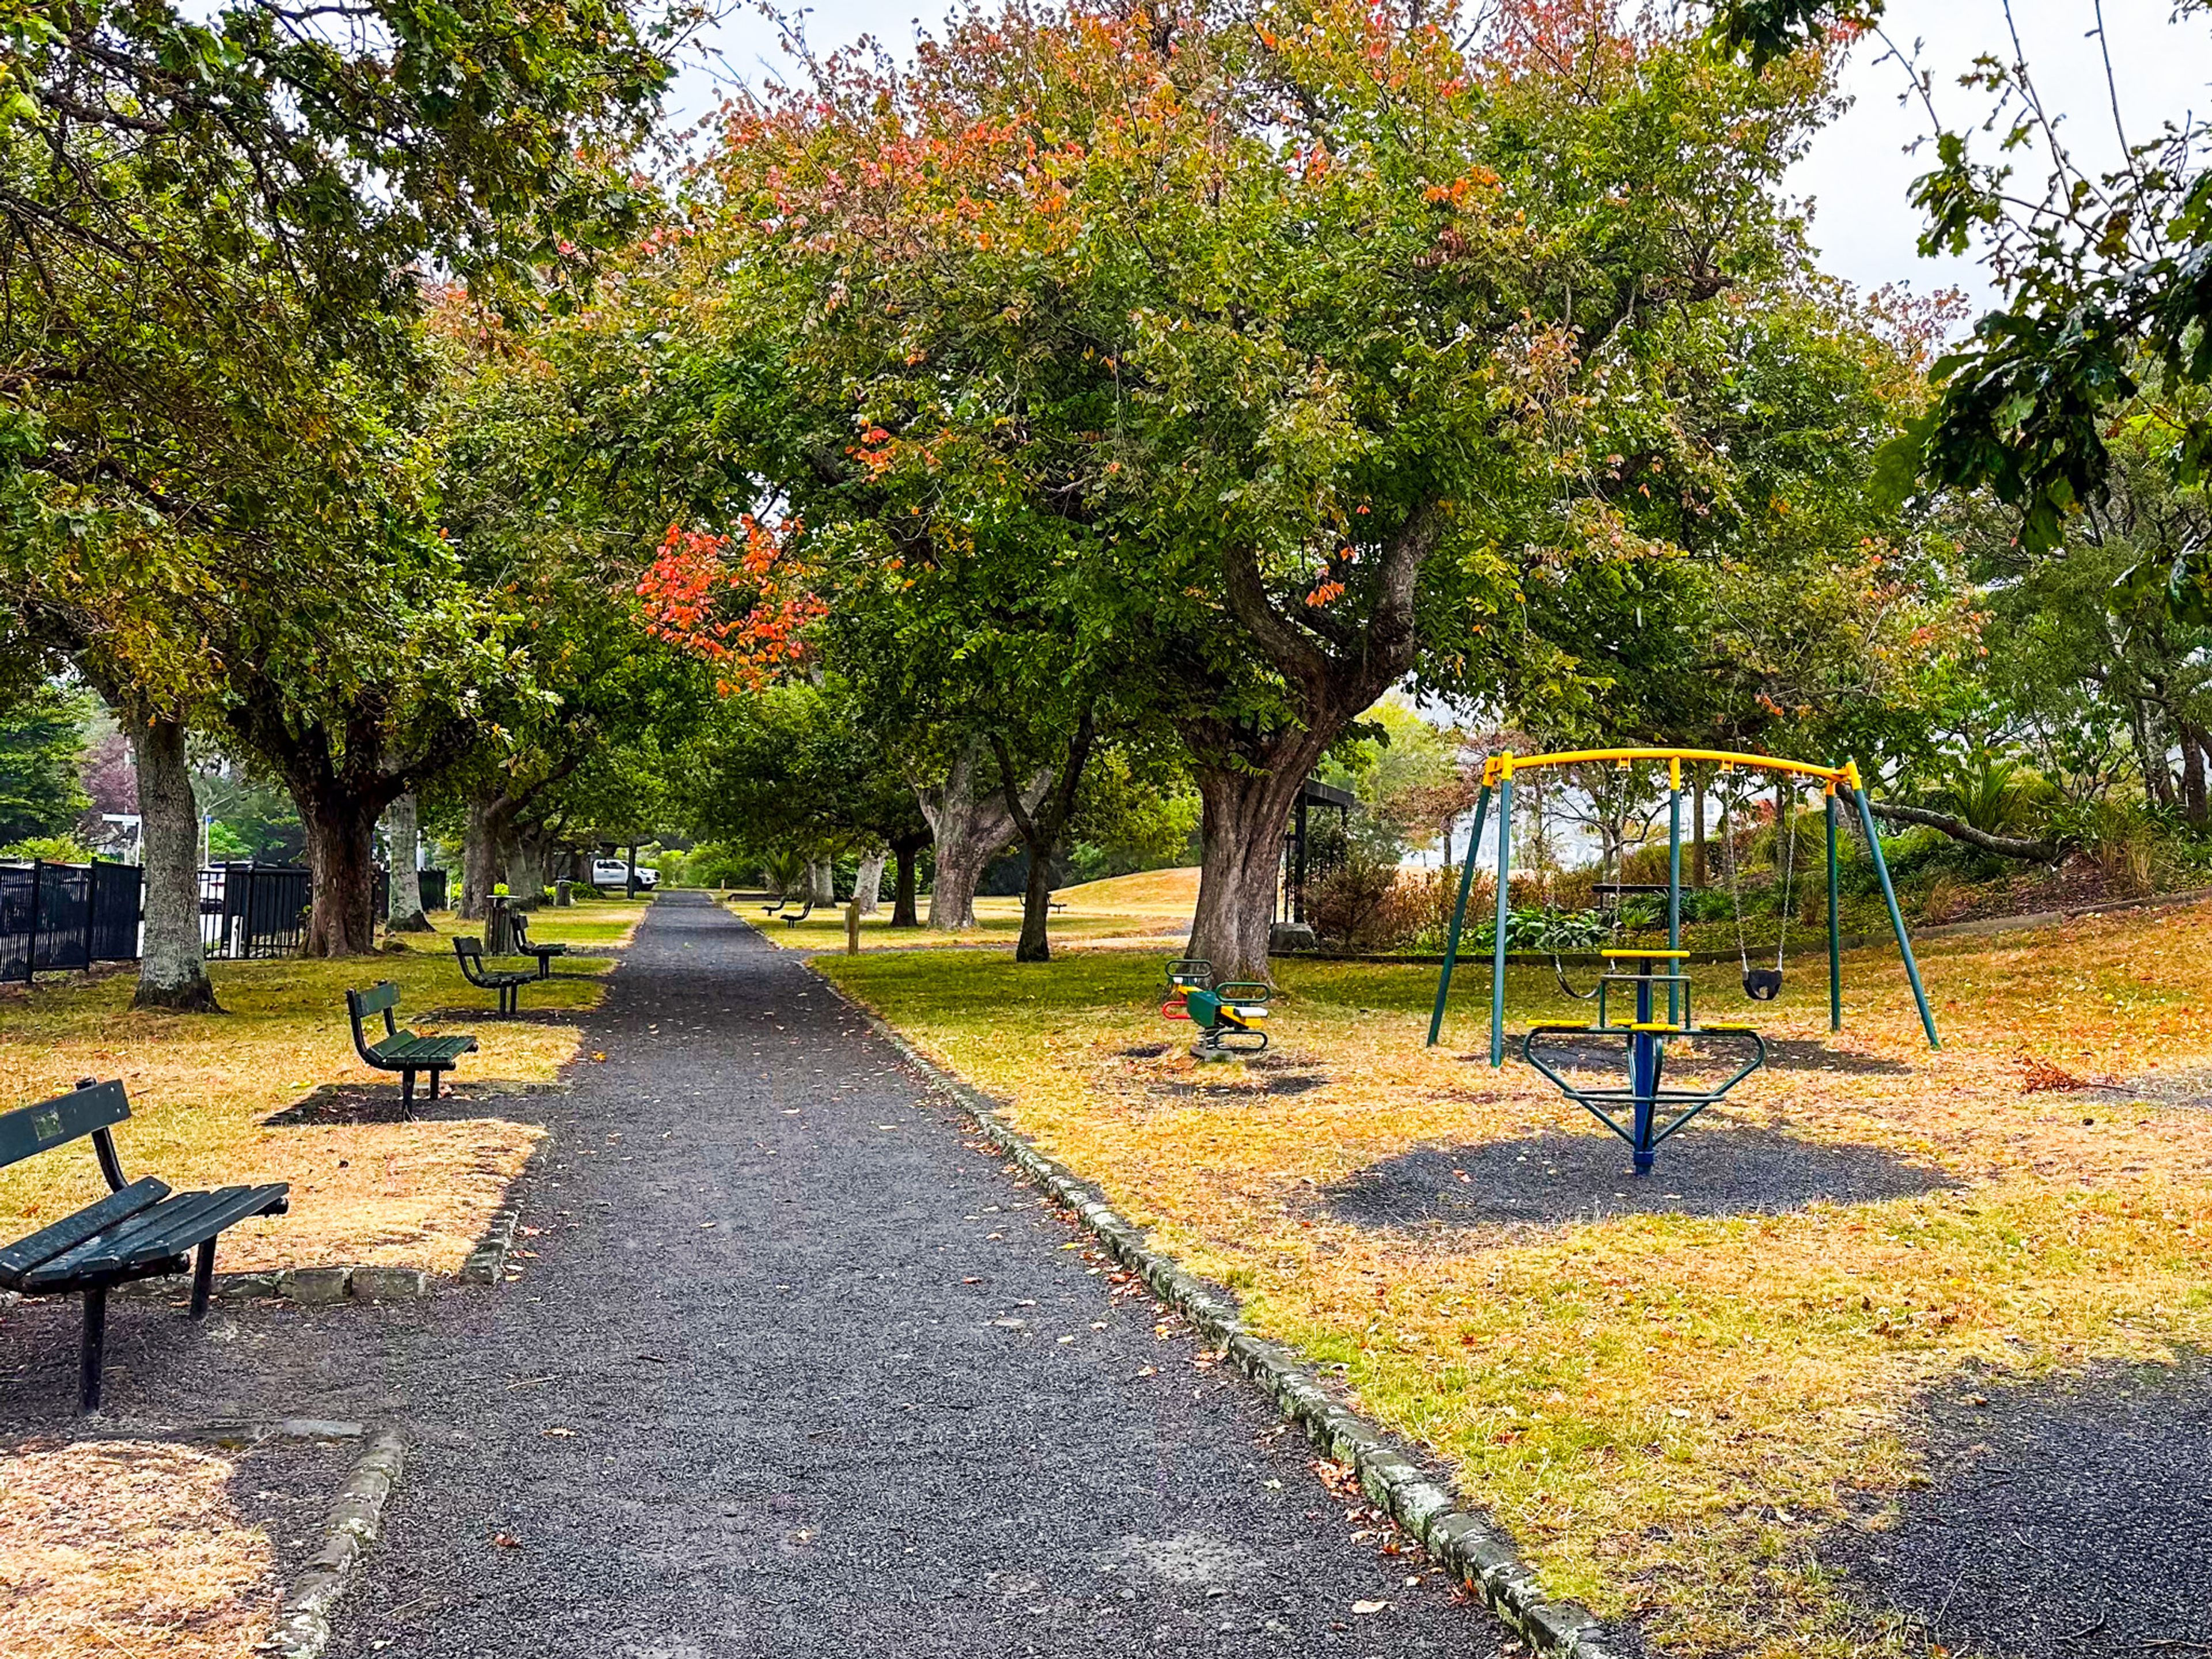 playground near the entrance to Katherine Mansfield Memorial Park